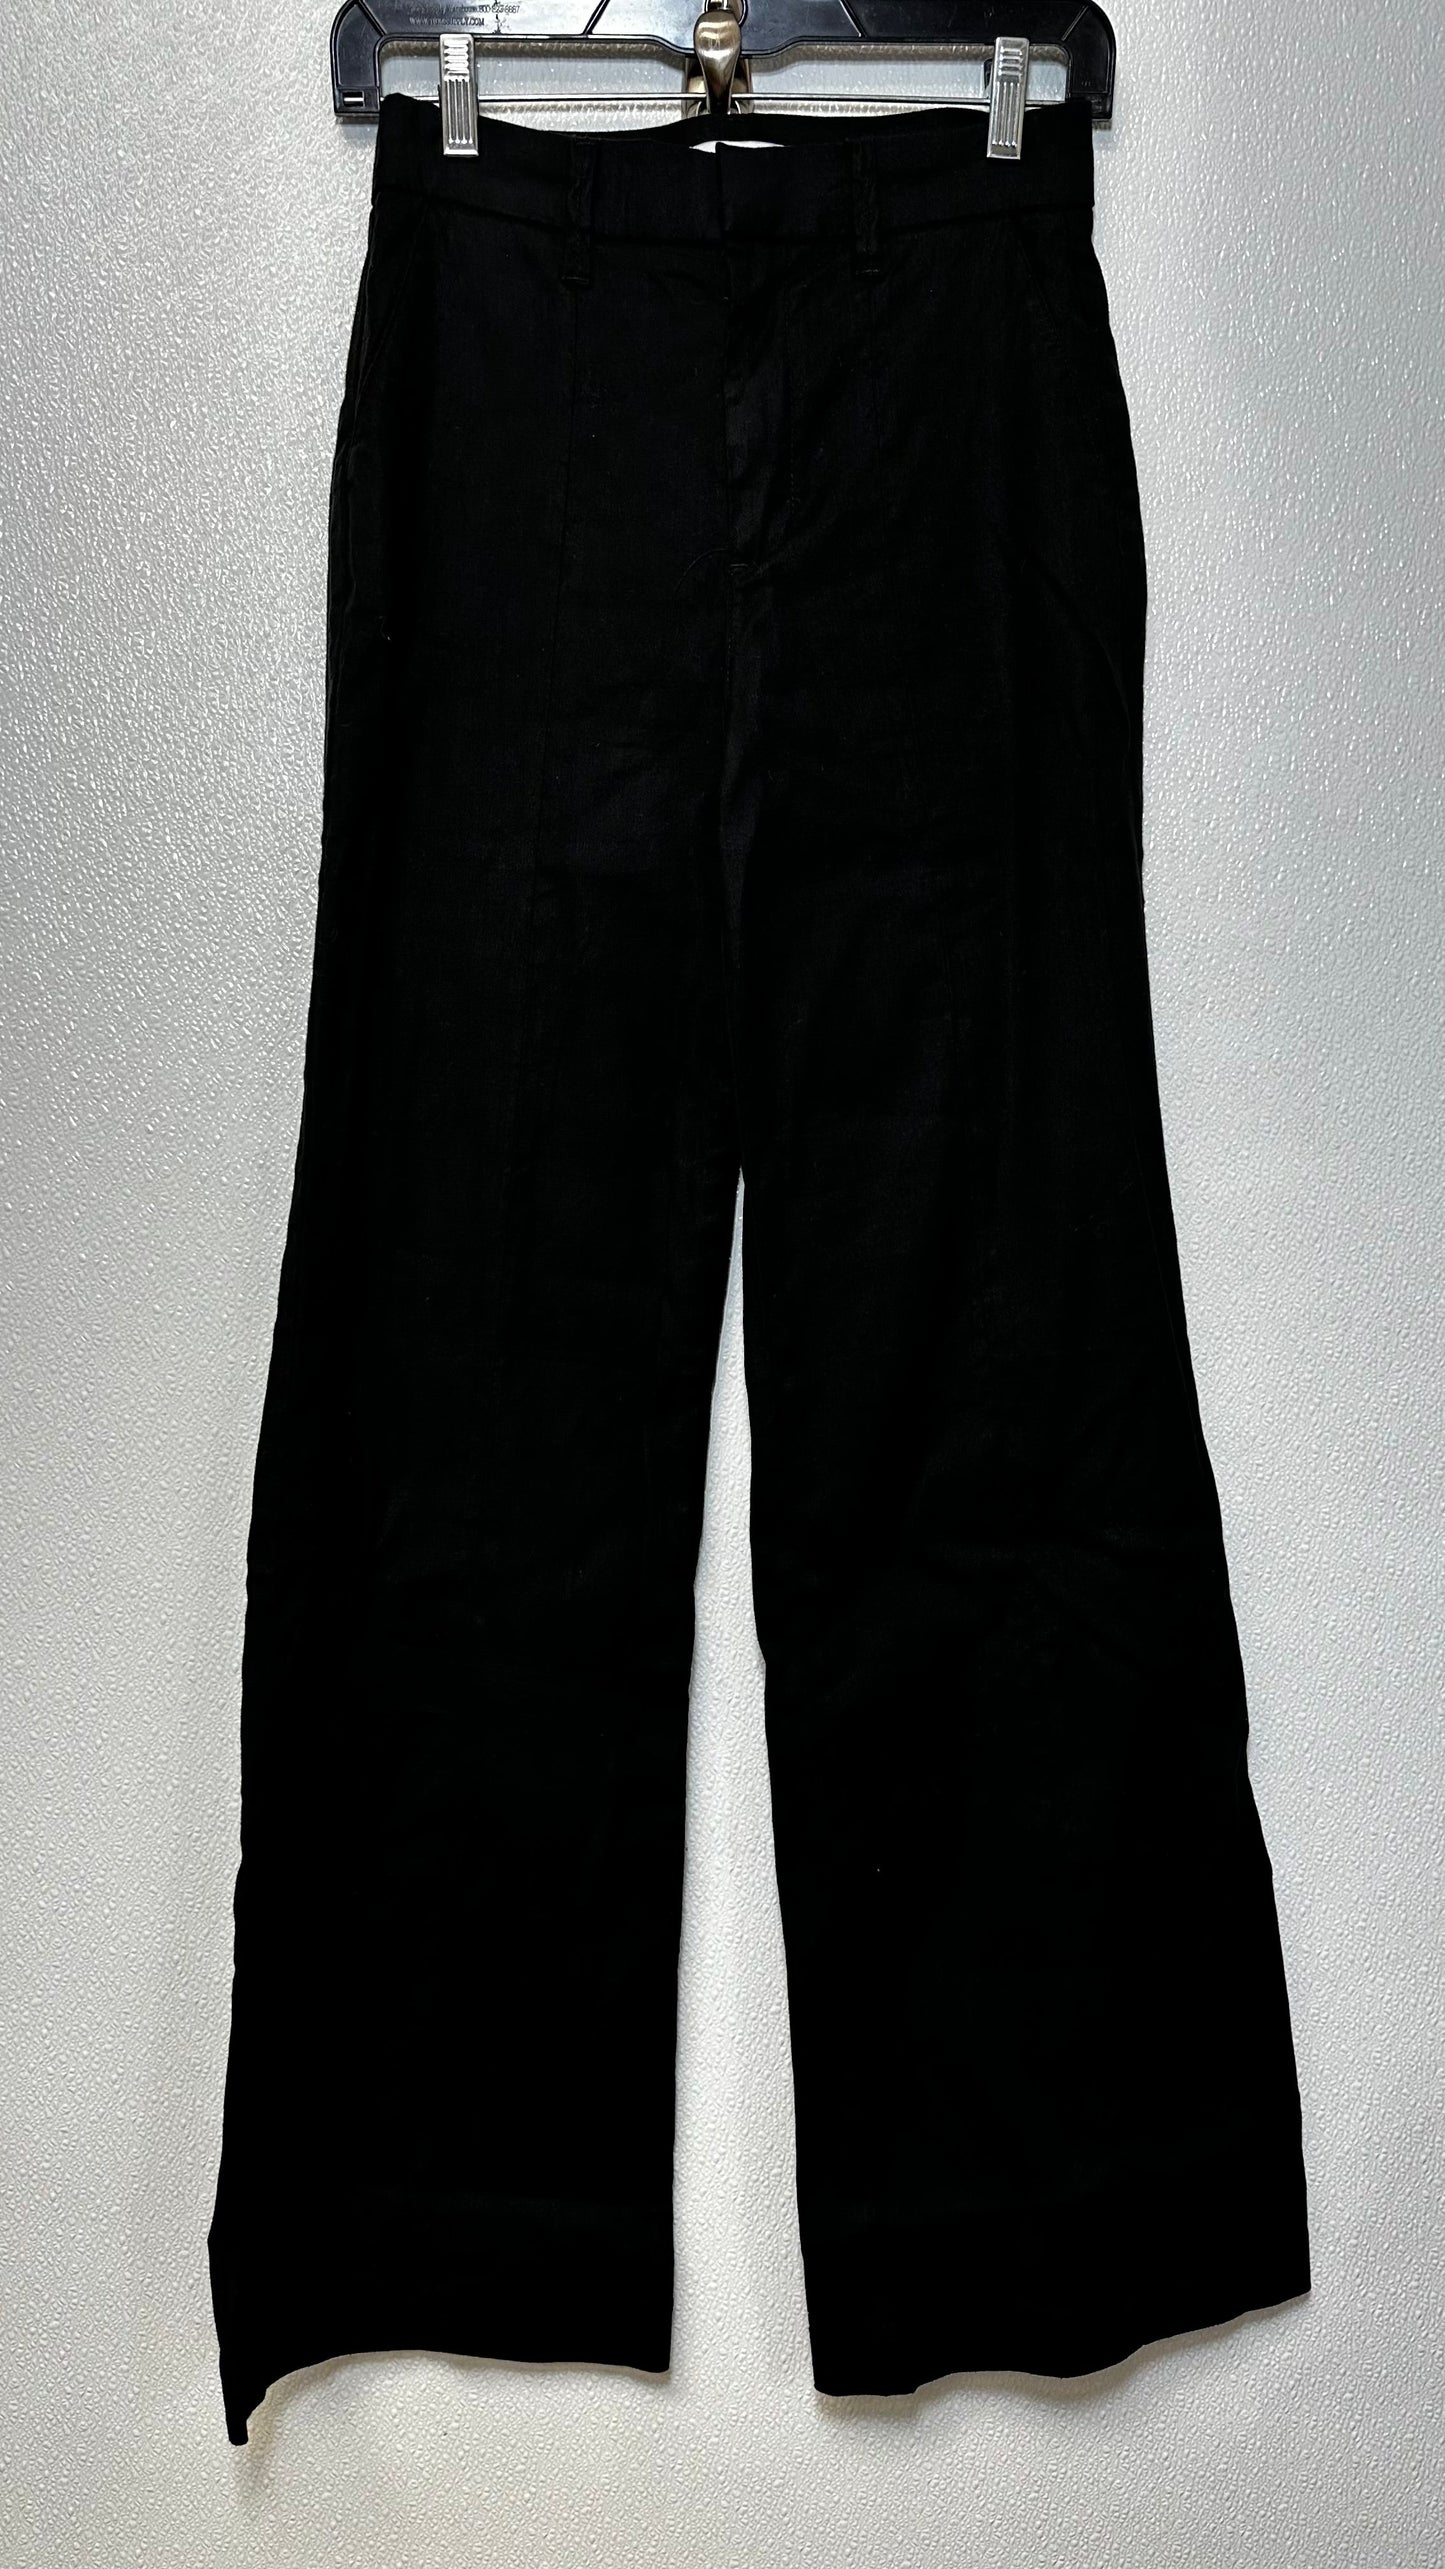 Black Pants Work/dress Clothes Mentor, Size 4